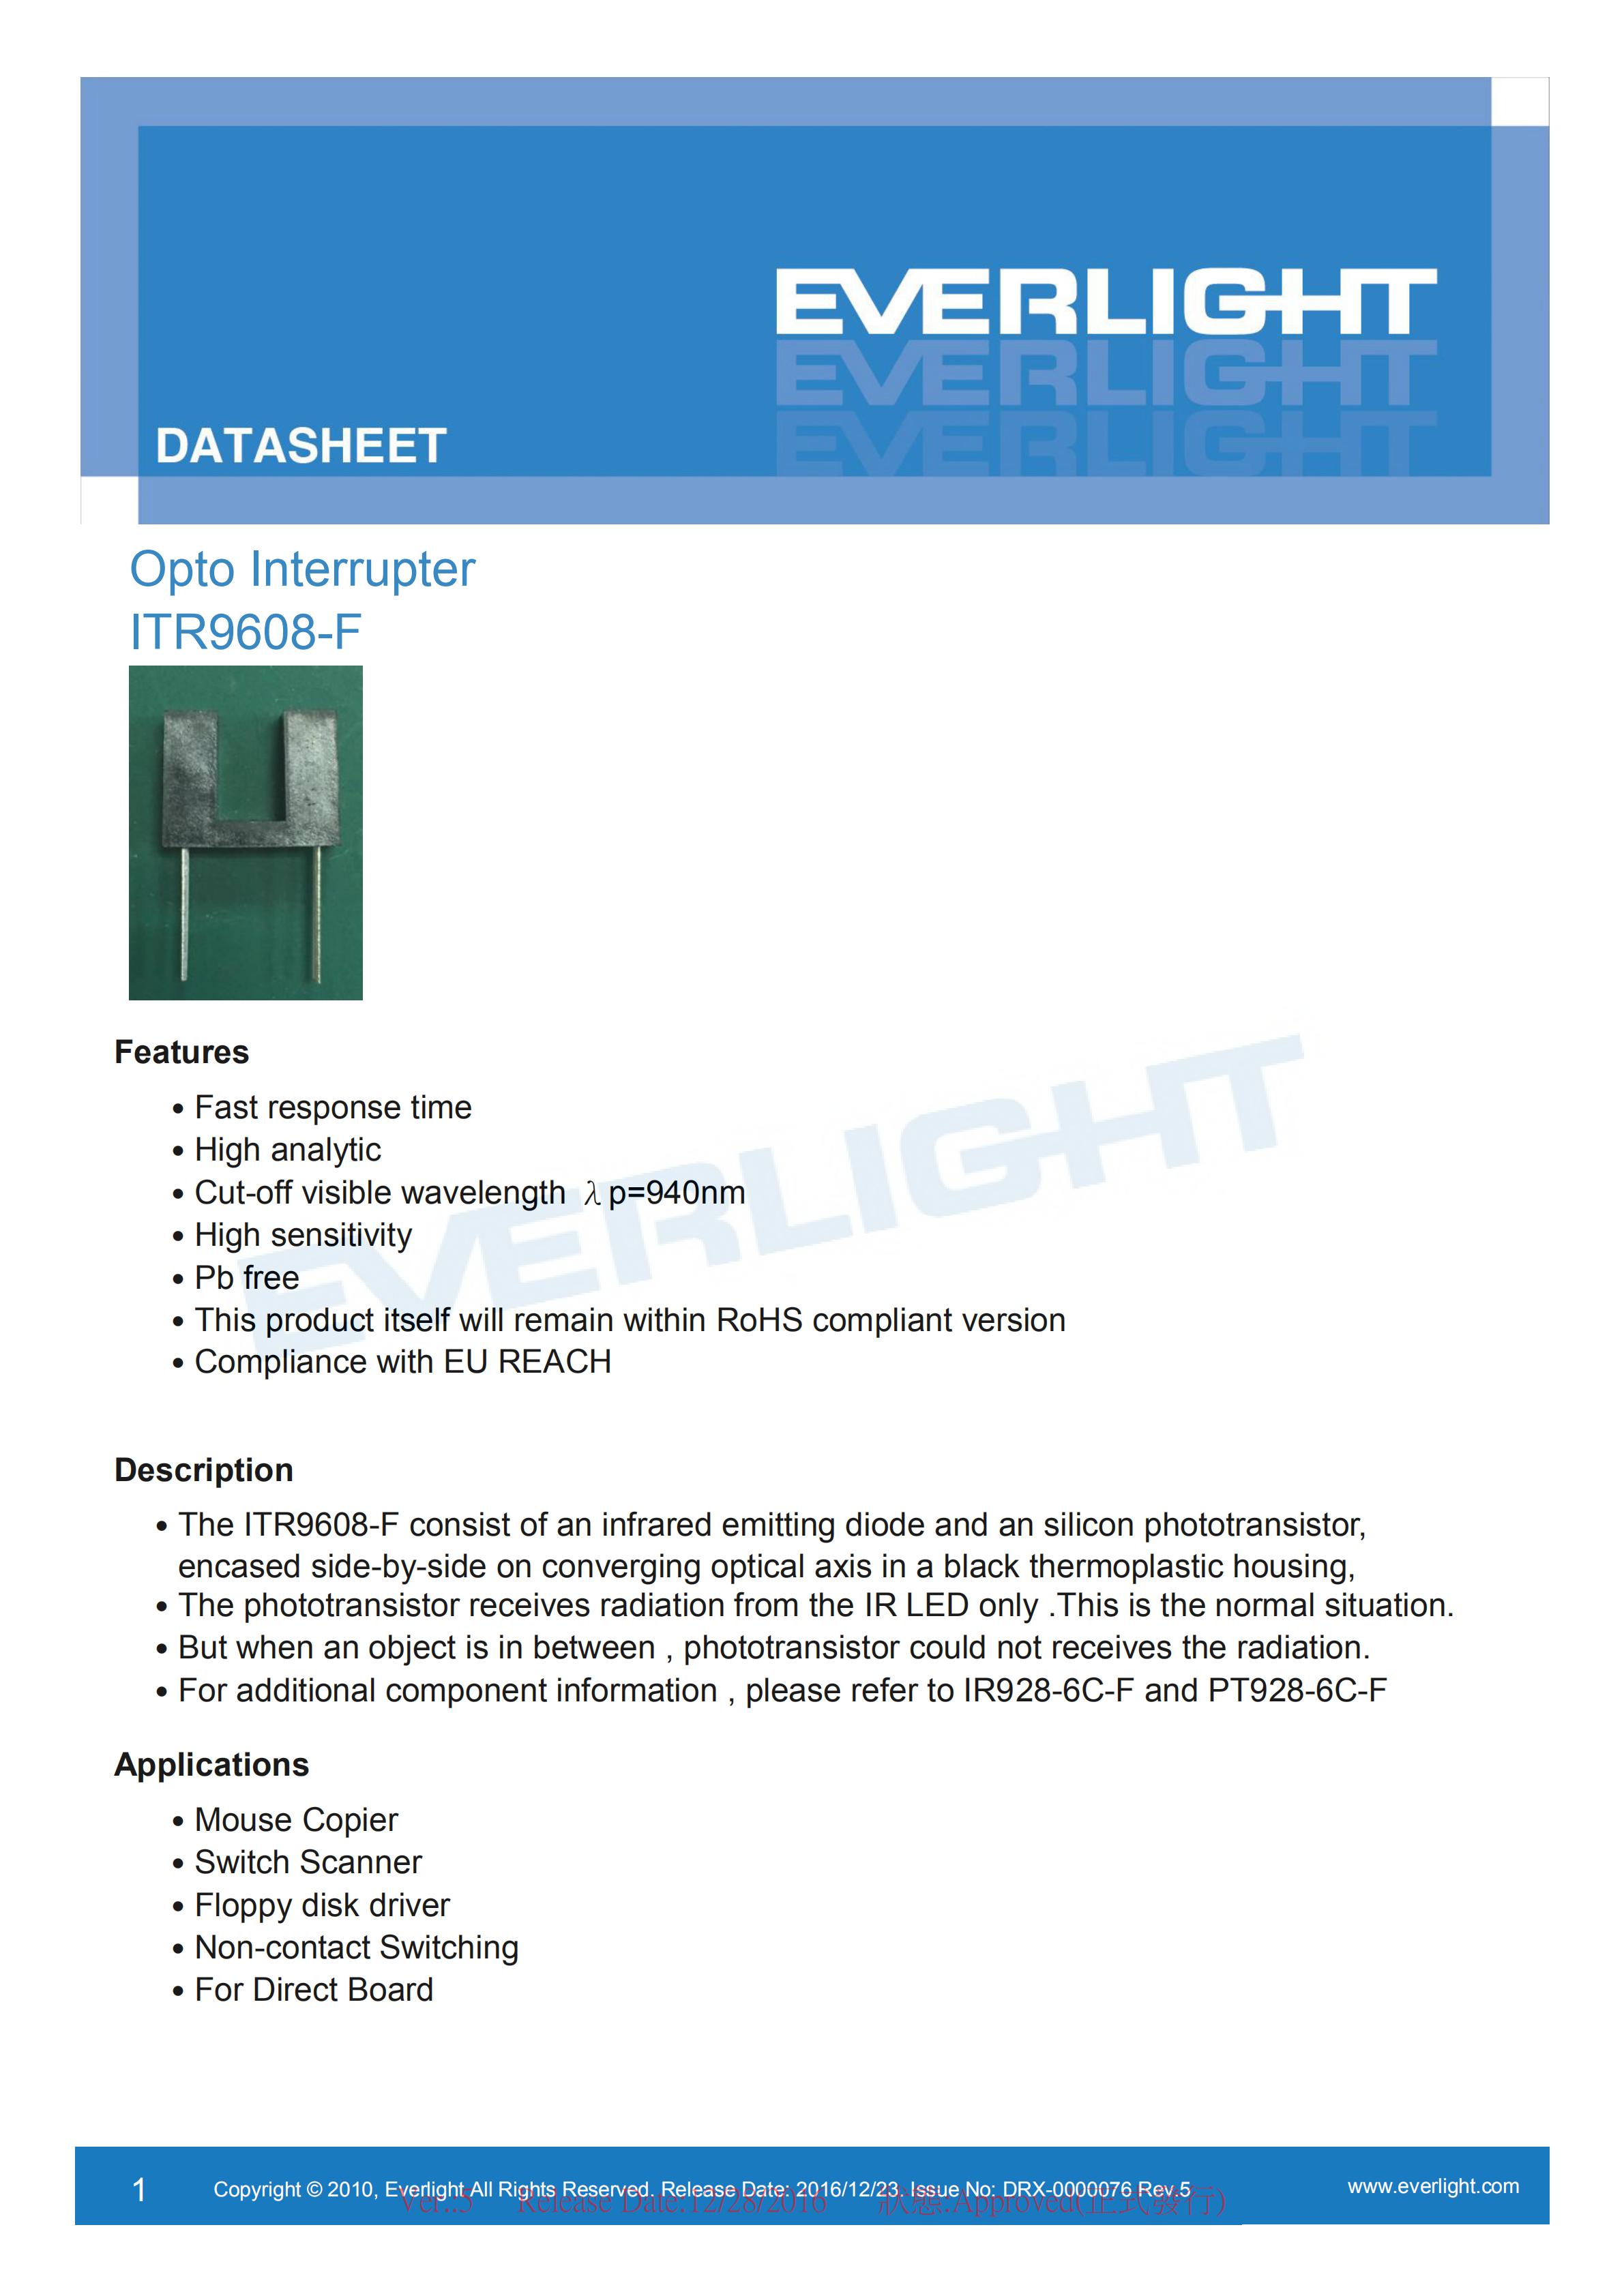 EVERLIGHT Optical Switch ITR9608-F Opto Interrupter Datasheet